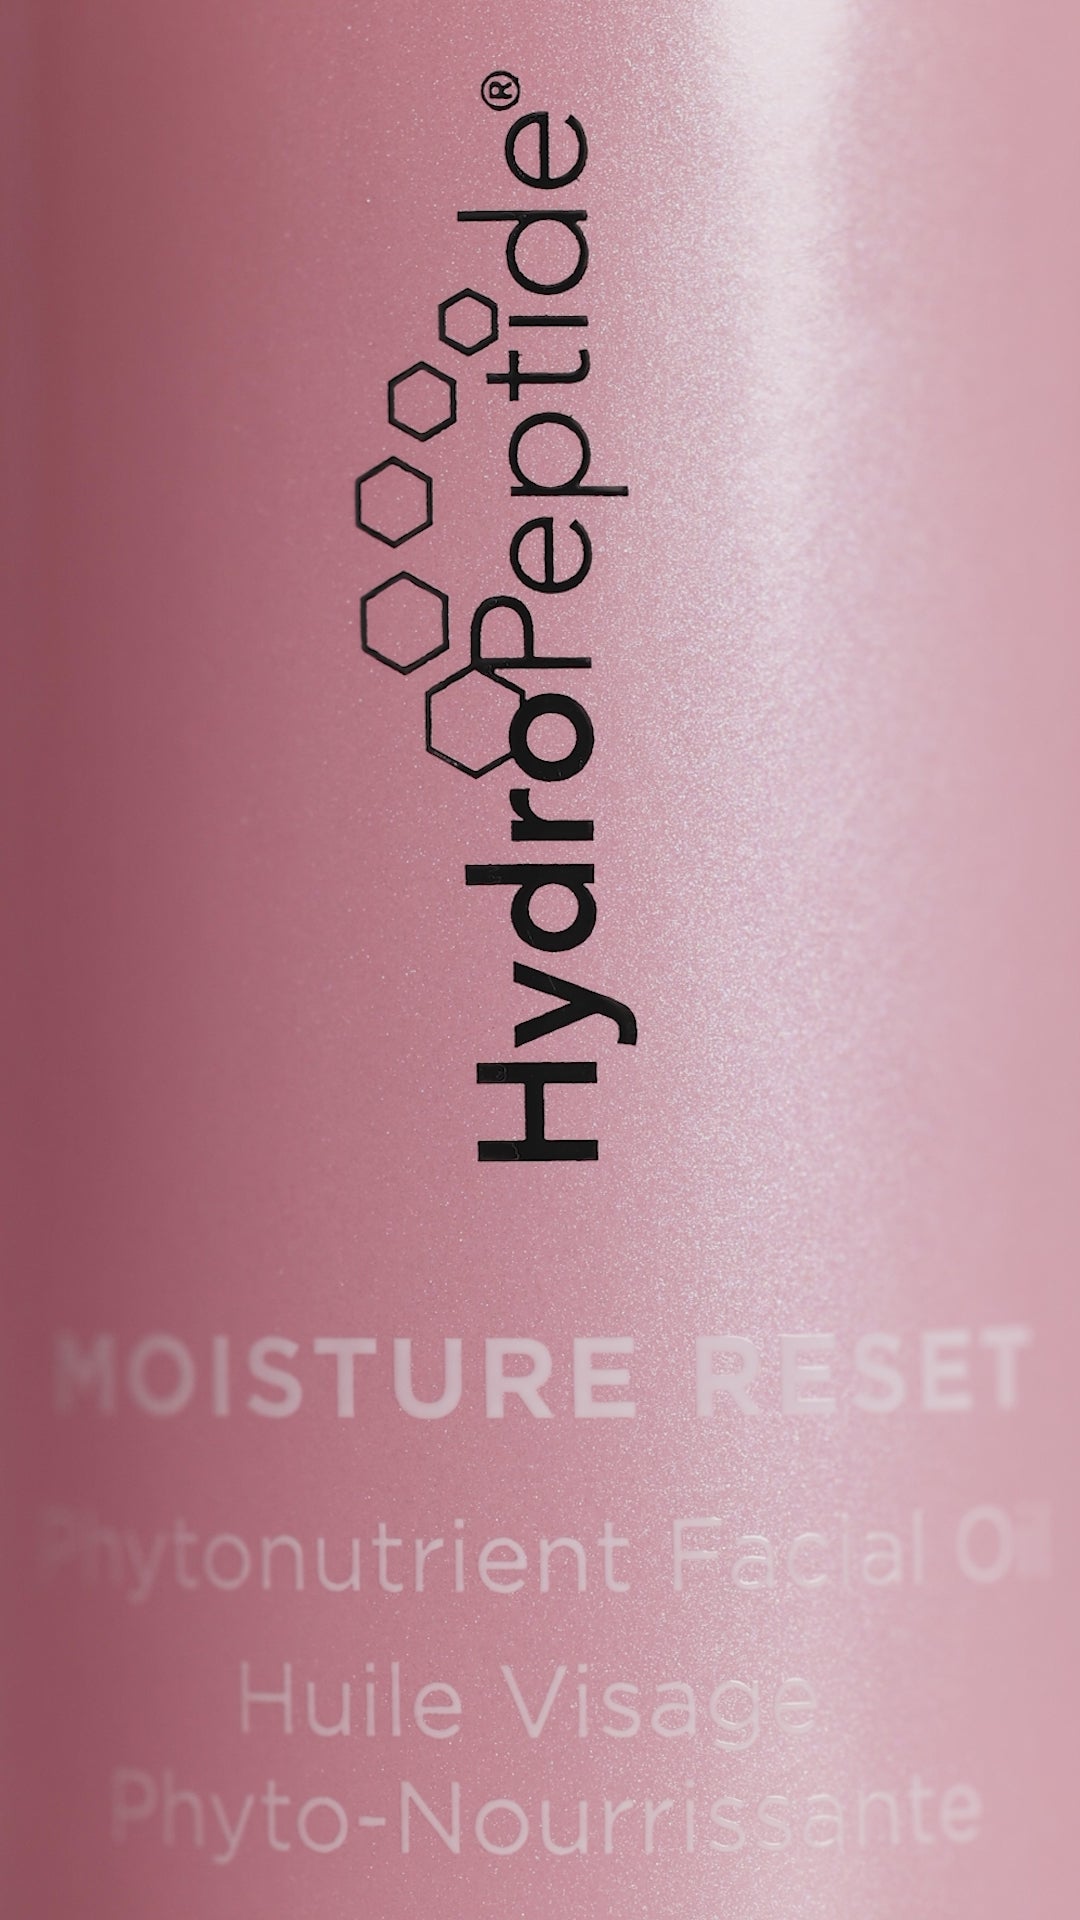 Moisture Reset | HydroPeptide Phytonutrient Facial Oil | Anti-Wrinkle + Restore